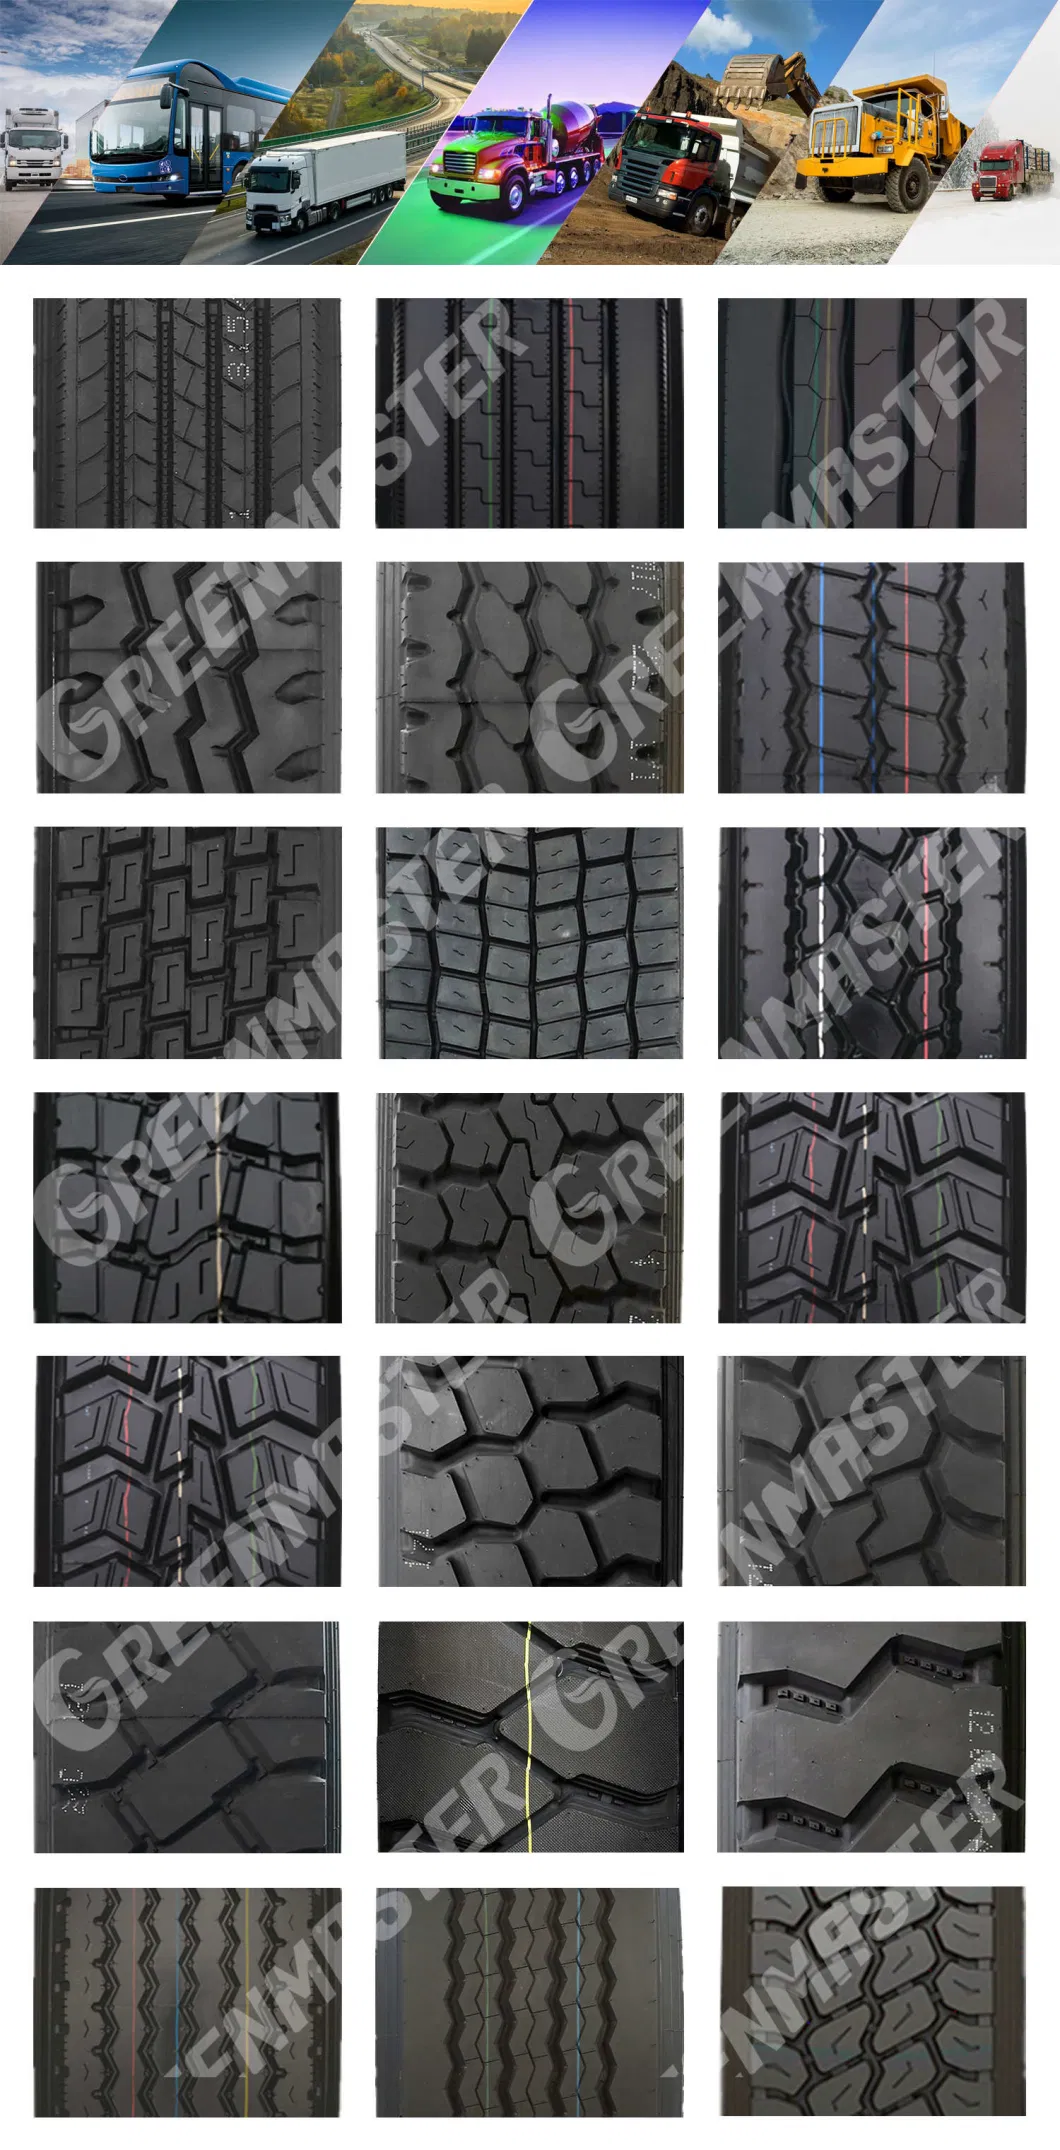 Passenger Car PCR off Road Tire, Truck/Bus/Trailer TBR Tires, Top Loader OTR Sks/R4 Industrial Solid Tyres, Agricultural Tractor Lawn Garden Turf &amp; ATV/UTV Tyre